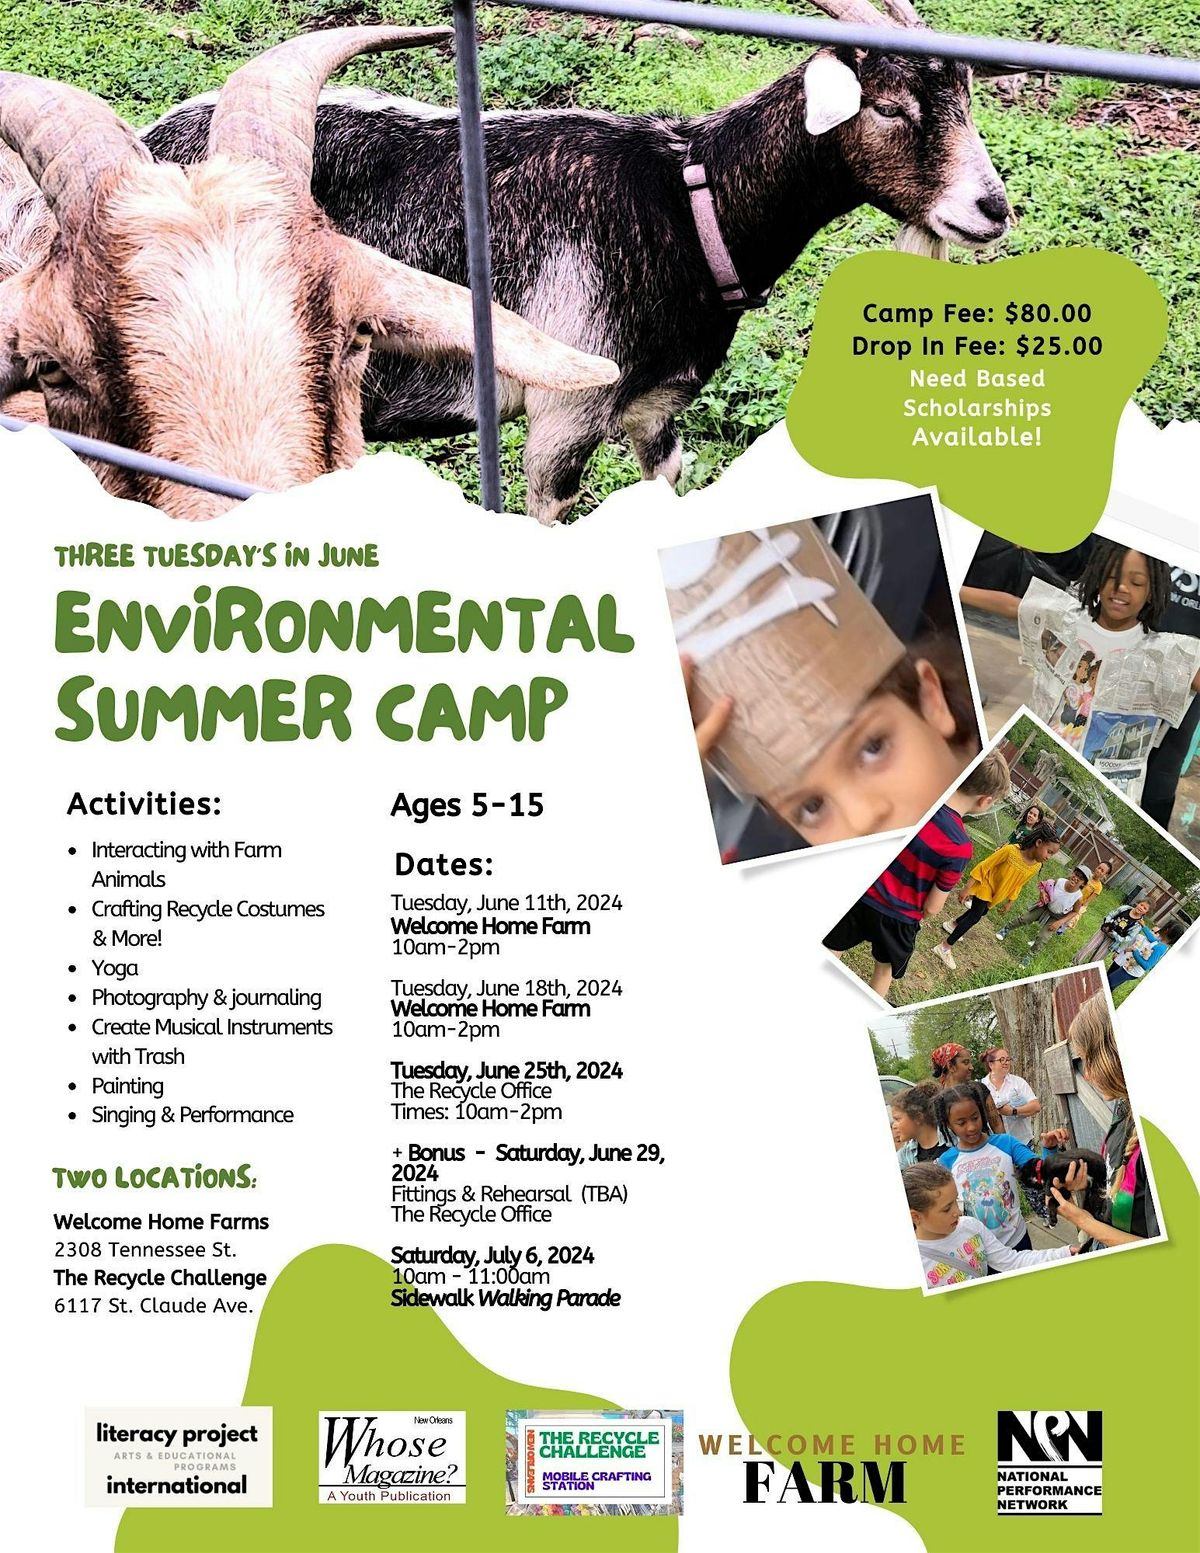 The Environmental Summer Camp